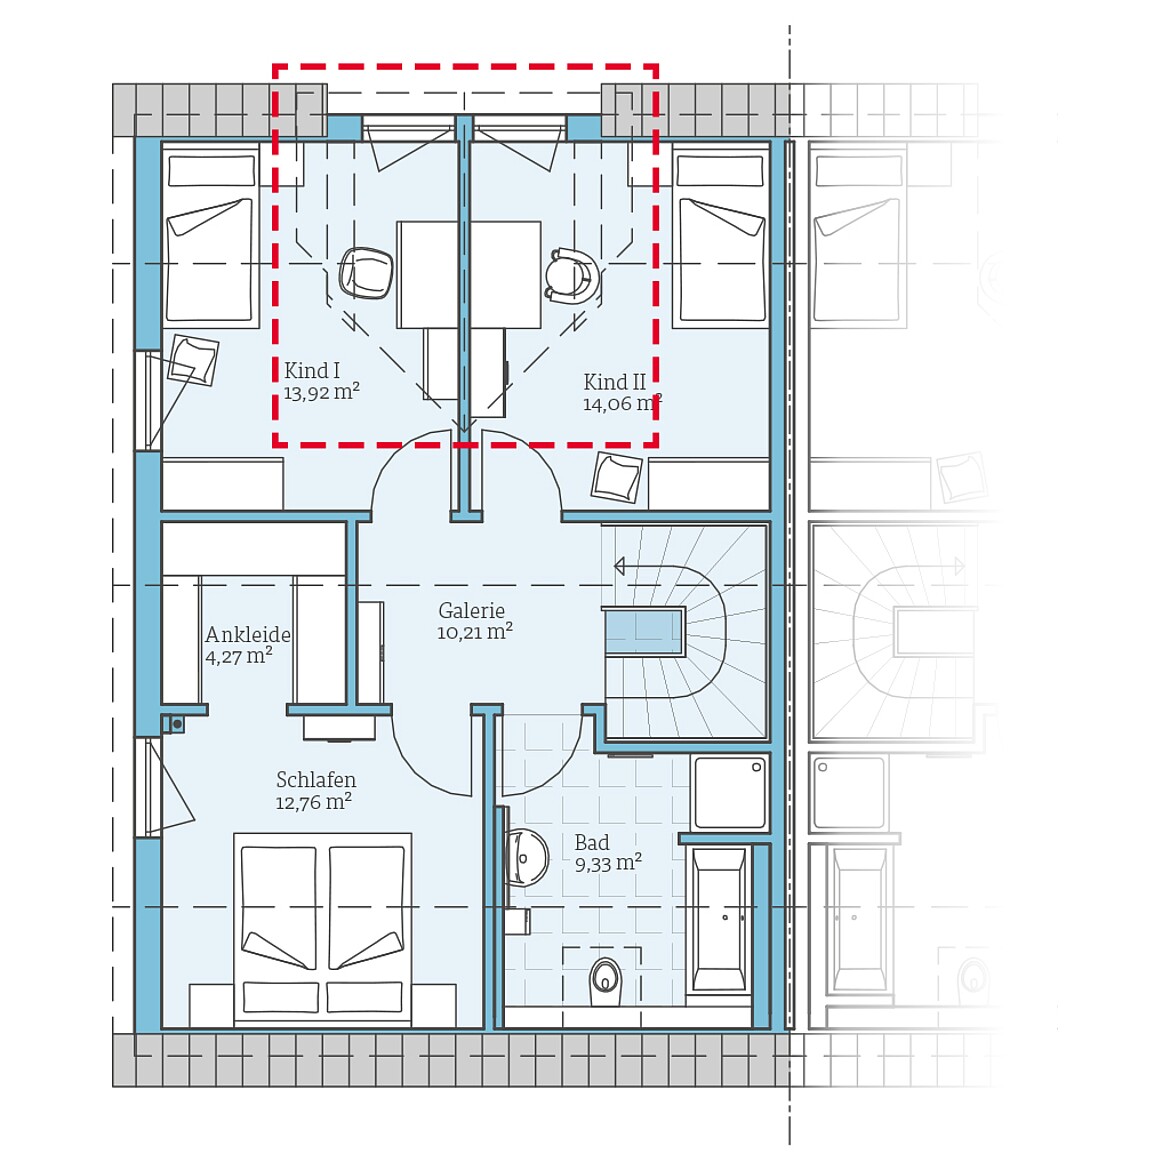 Prefabricated semi-detached house 35-130: Top floor plan option